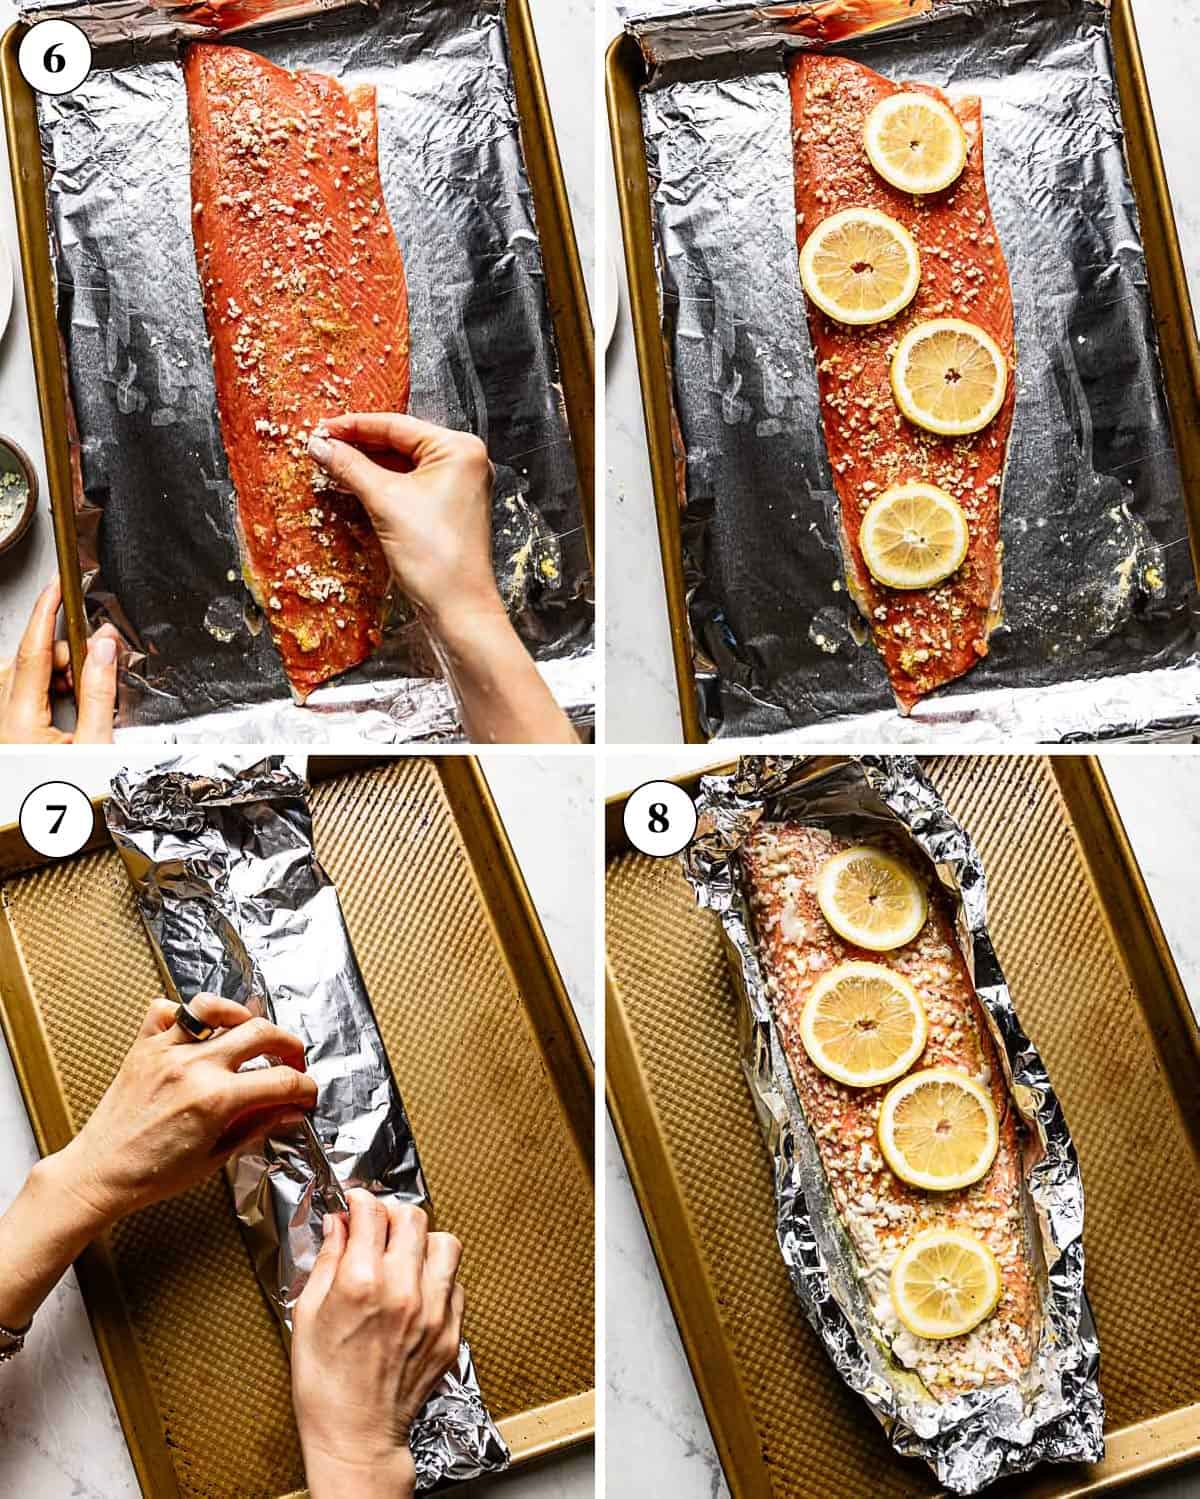 Person preparing Wild caught Alaskan salmon for cooking it in aluminum foil.